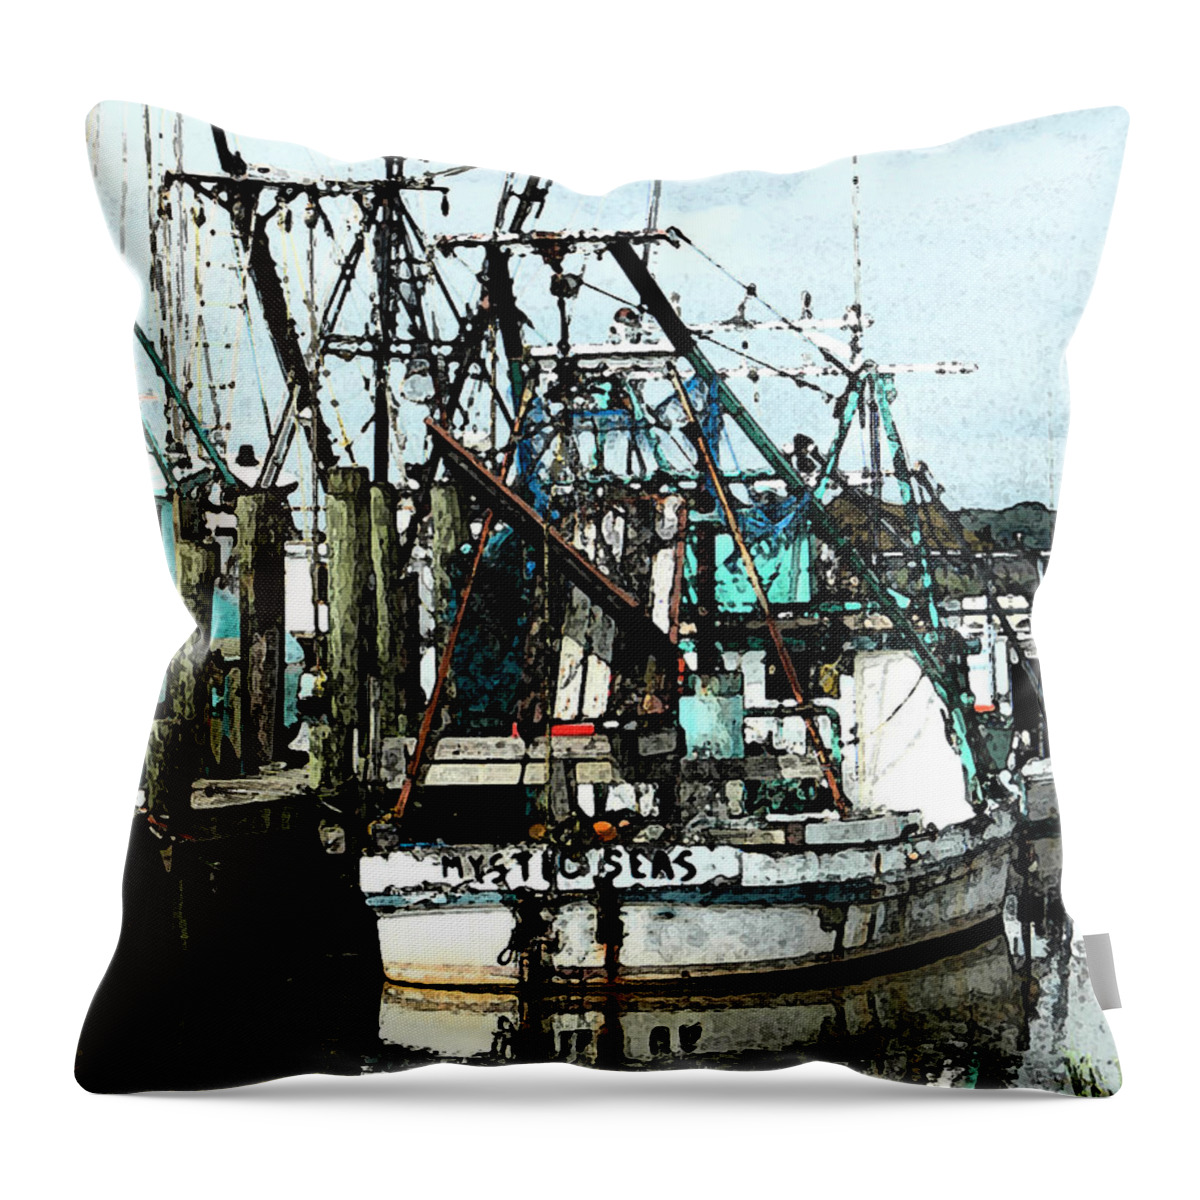 Chain Throw Pillow featuring the photograph Mystic Seas by Glenn Grossman